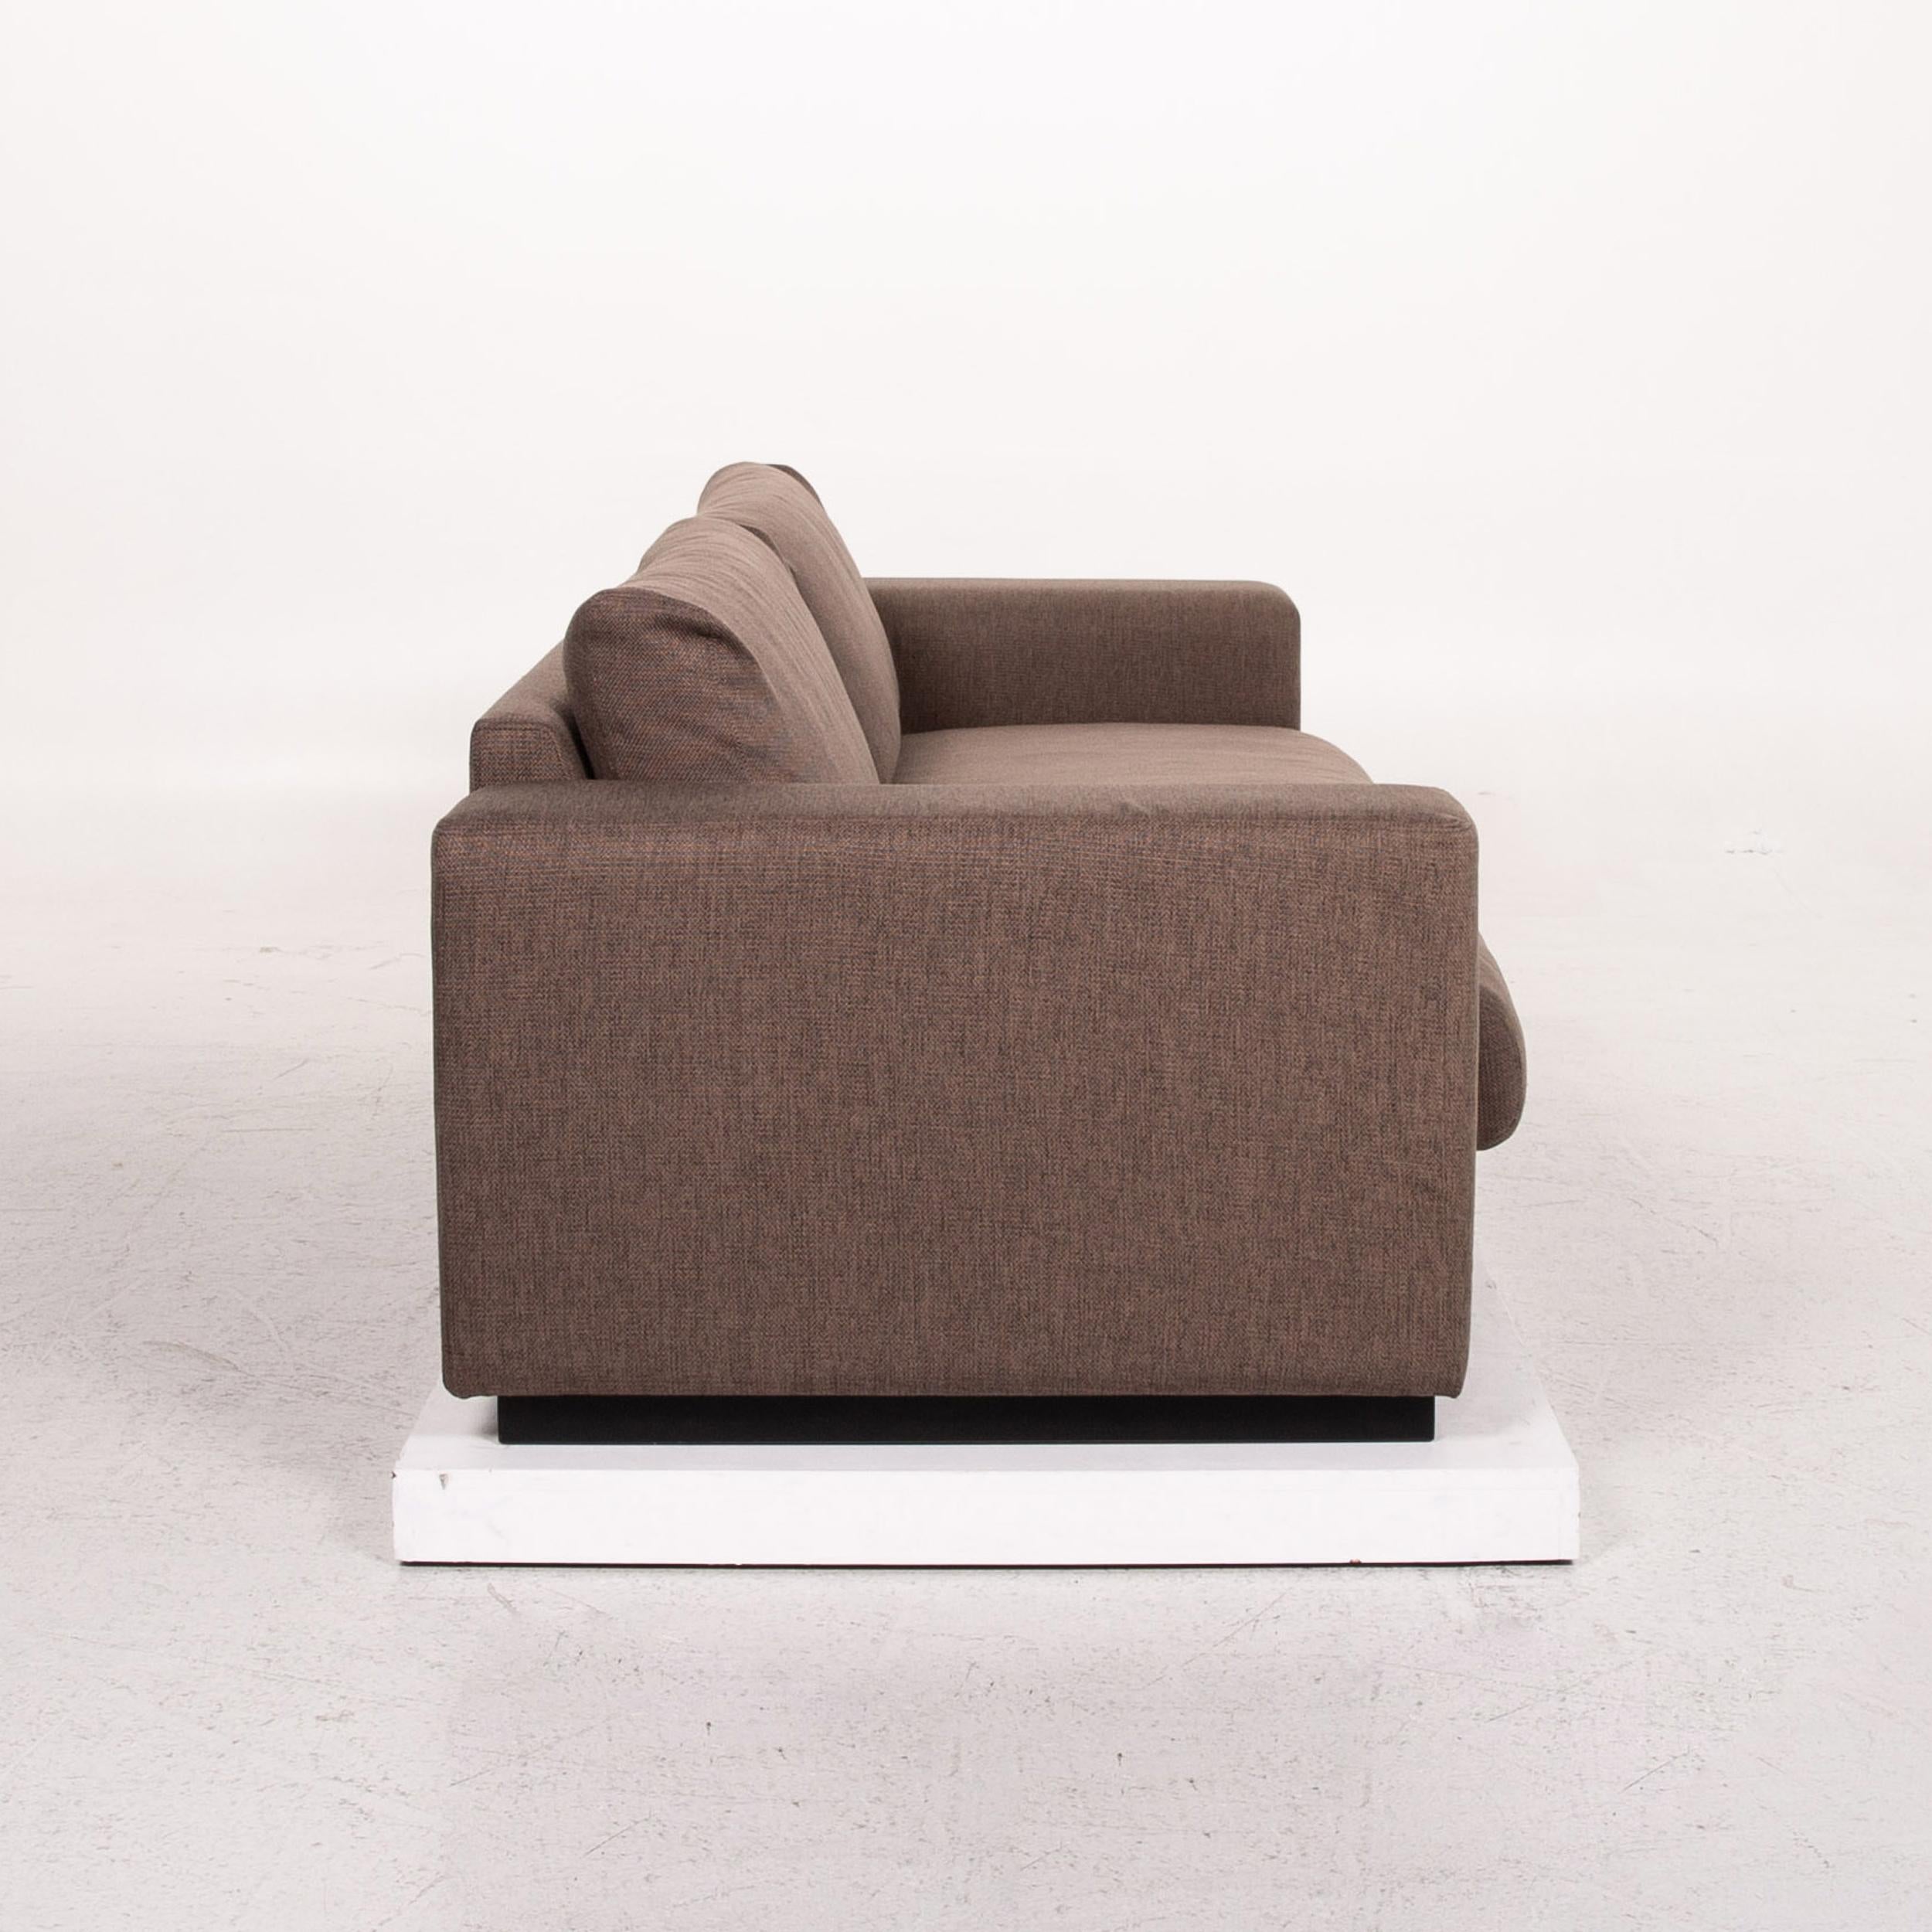 Bolia Sepia Fabric Sofa Brown Three-Seat Couch In Excellent Condition For Sale In Cologne, DE